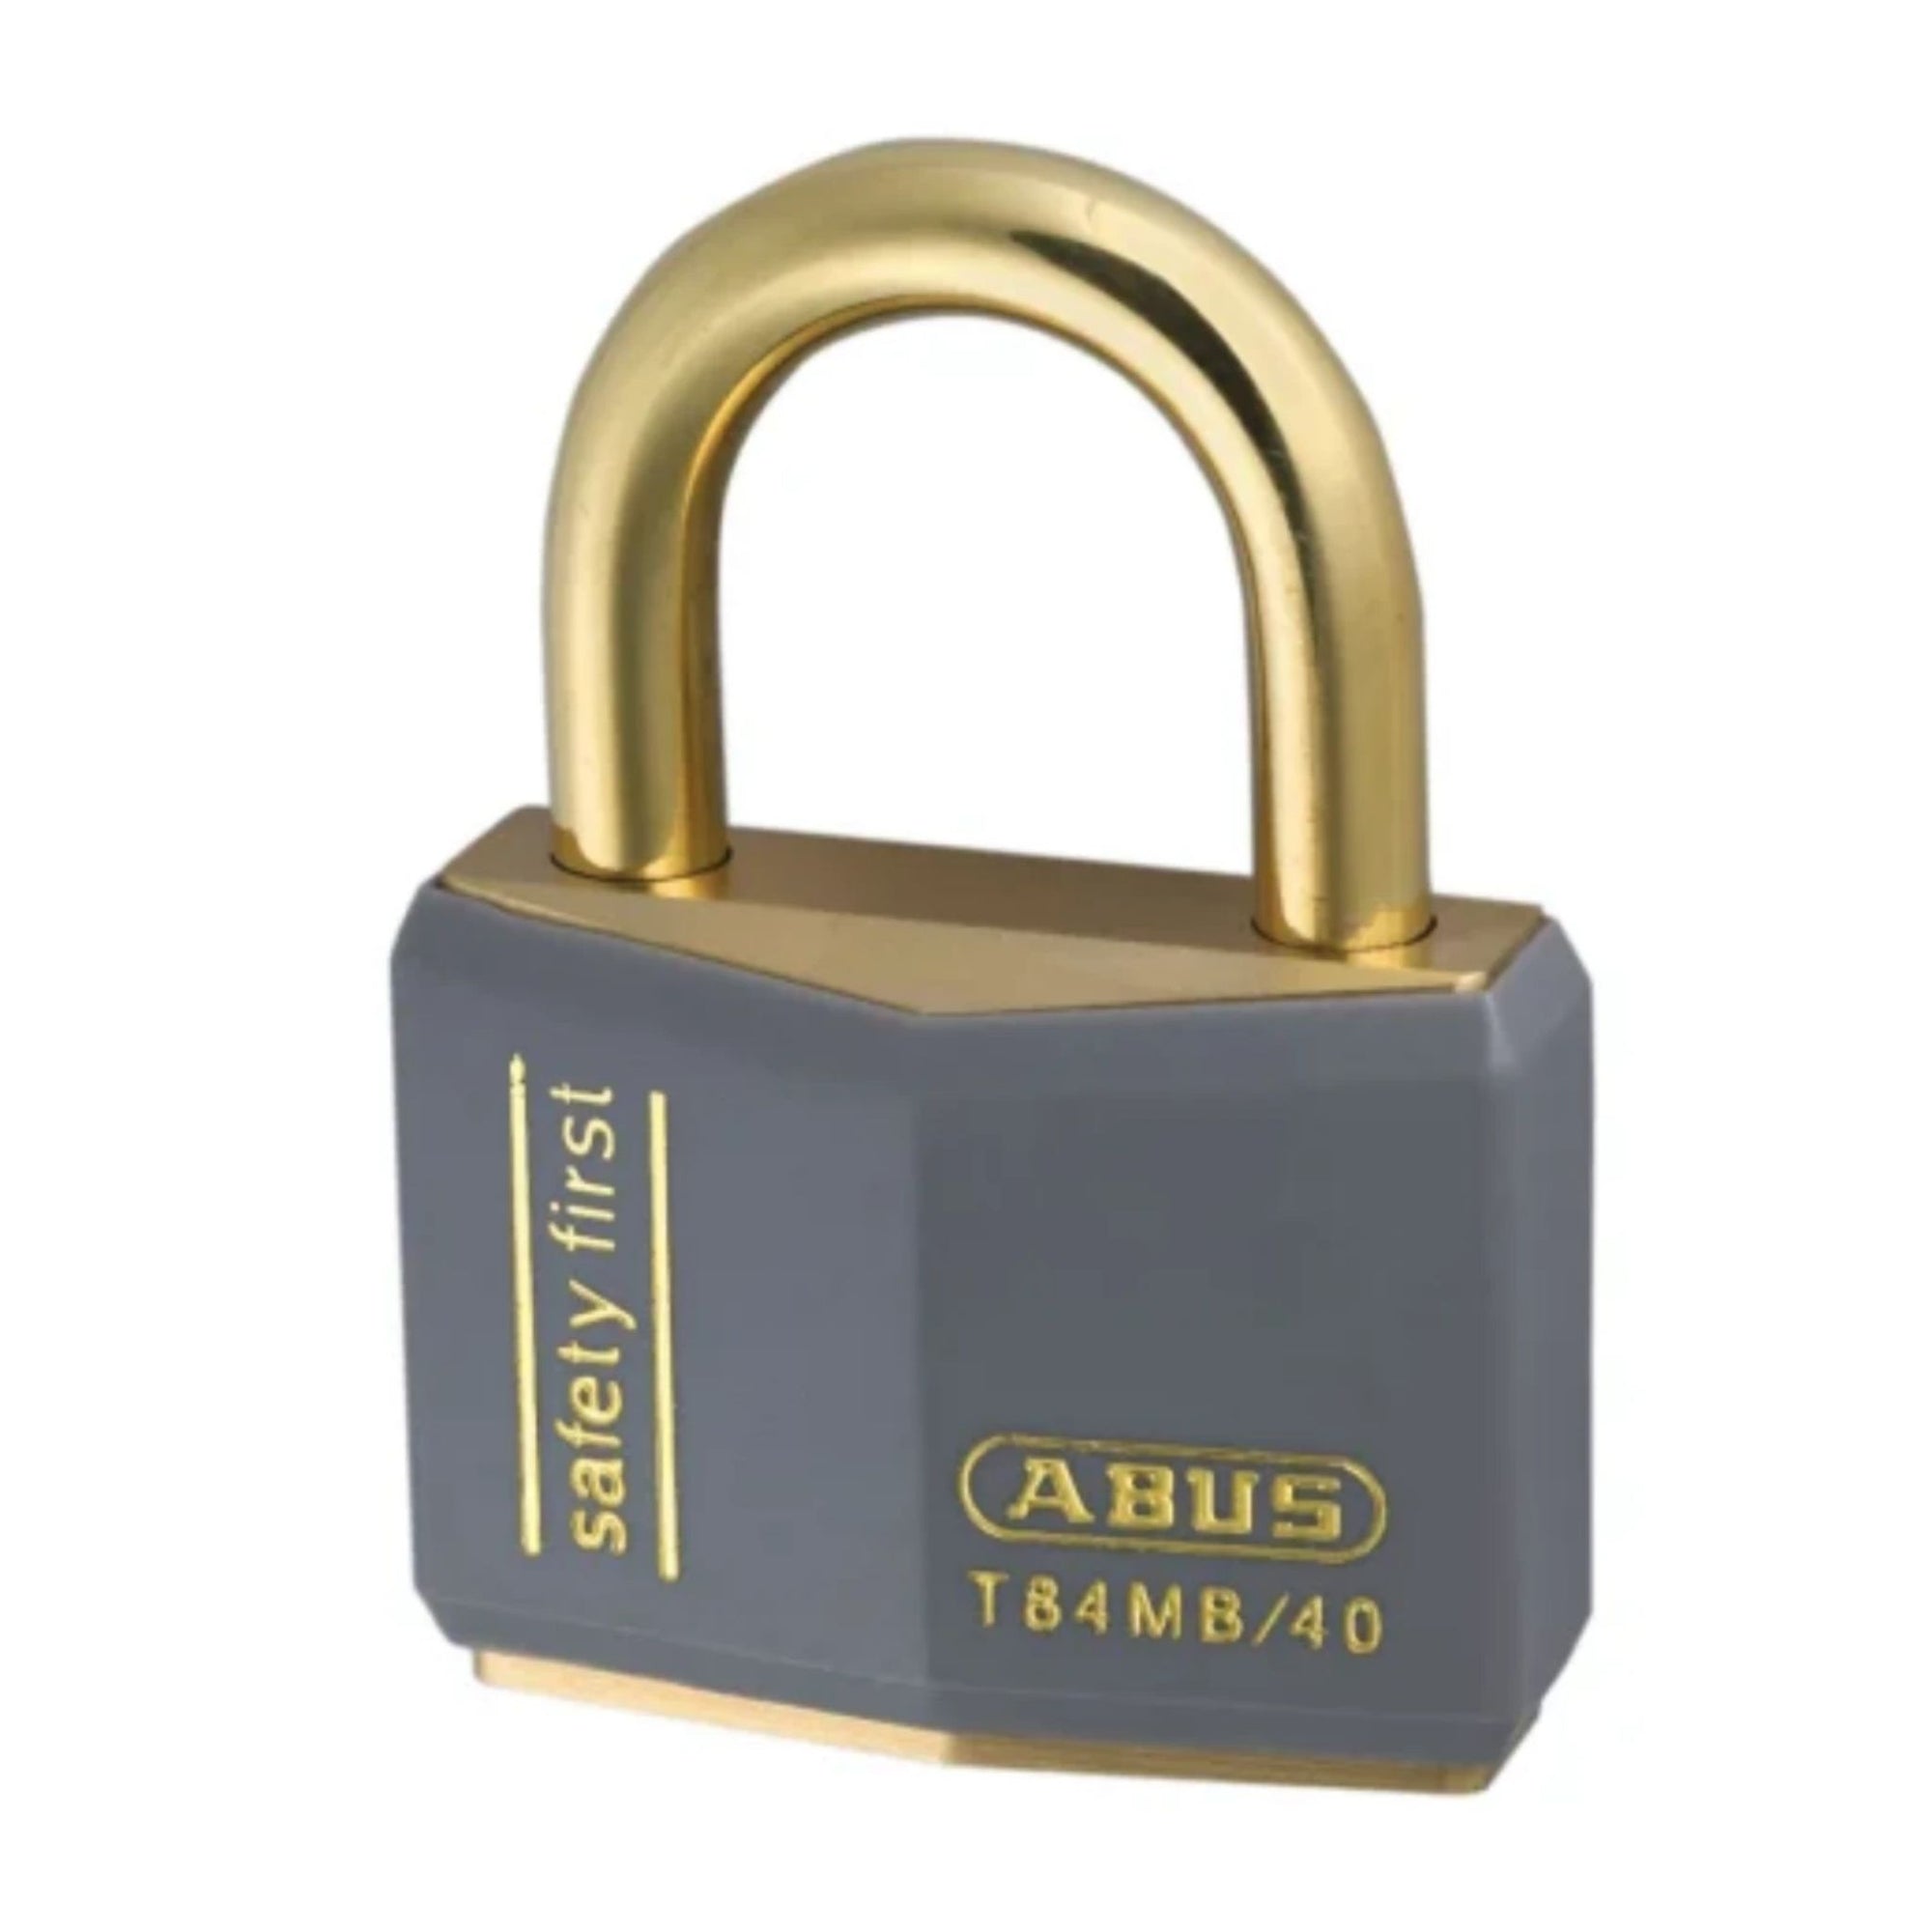 Abus T84MB/40 B KA Grey Weatherproof Brass Padlock - The Lock Source